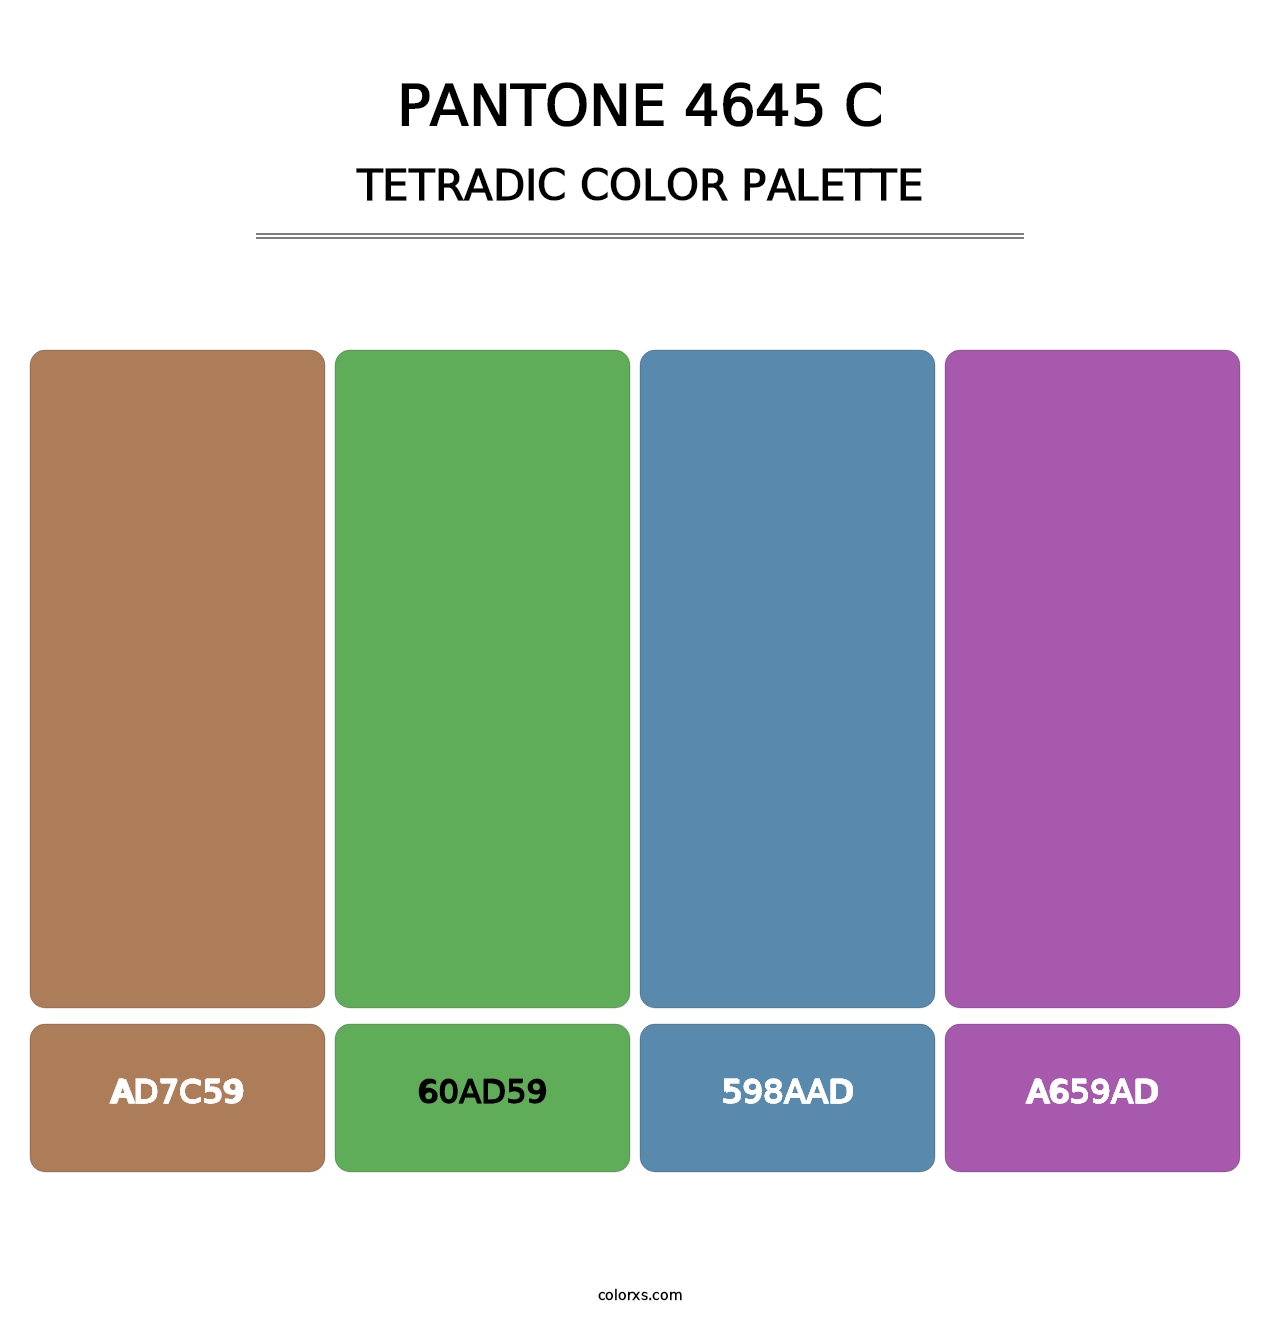 PANTONE 4645 C - Tetradic Color Palette